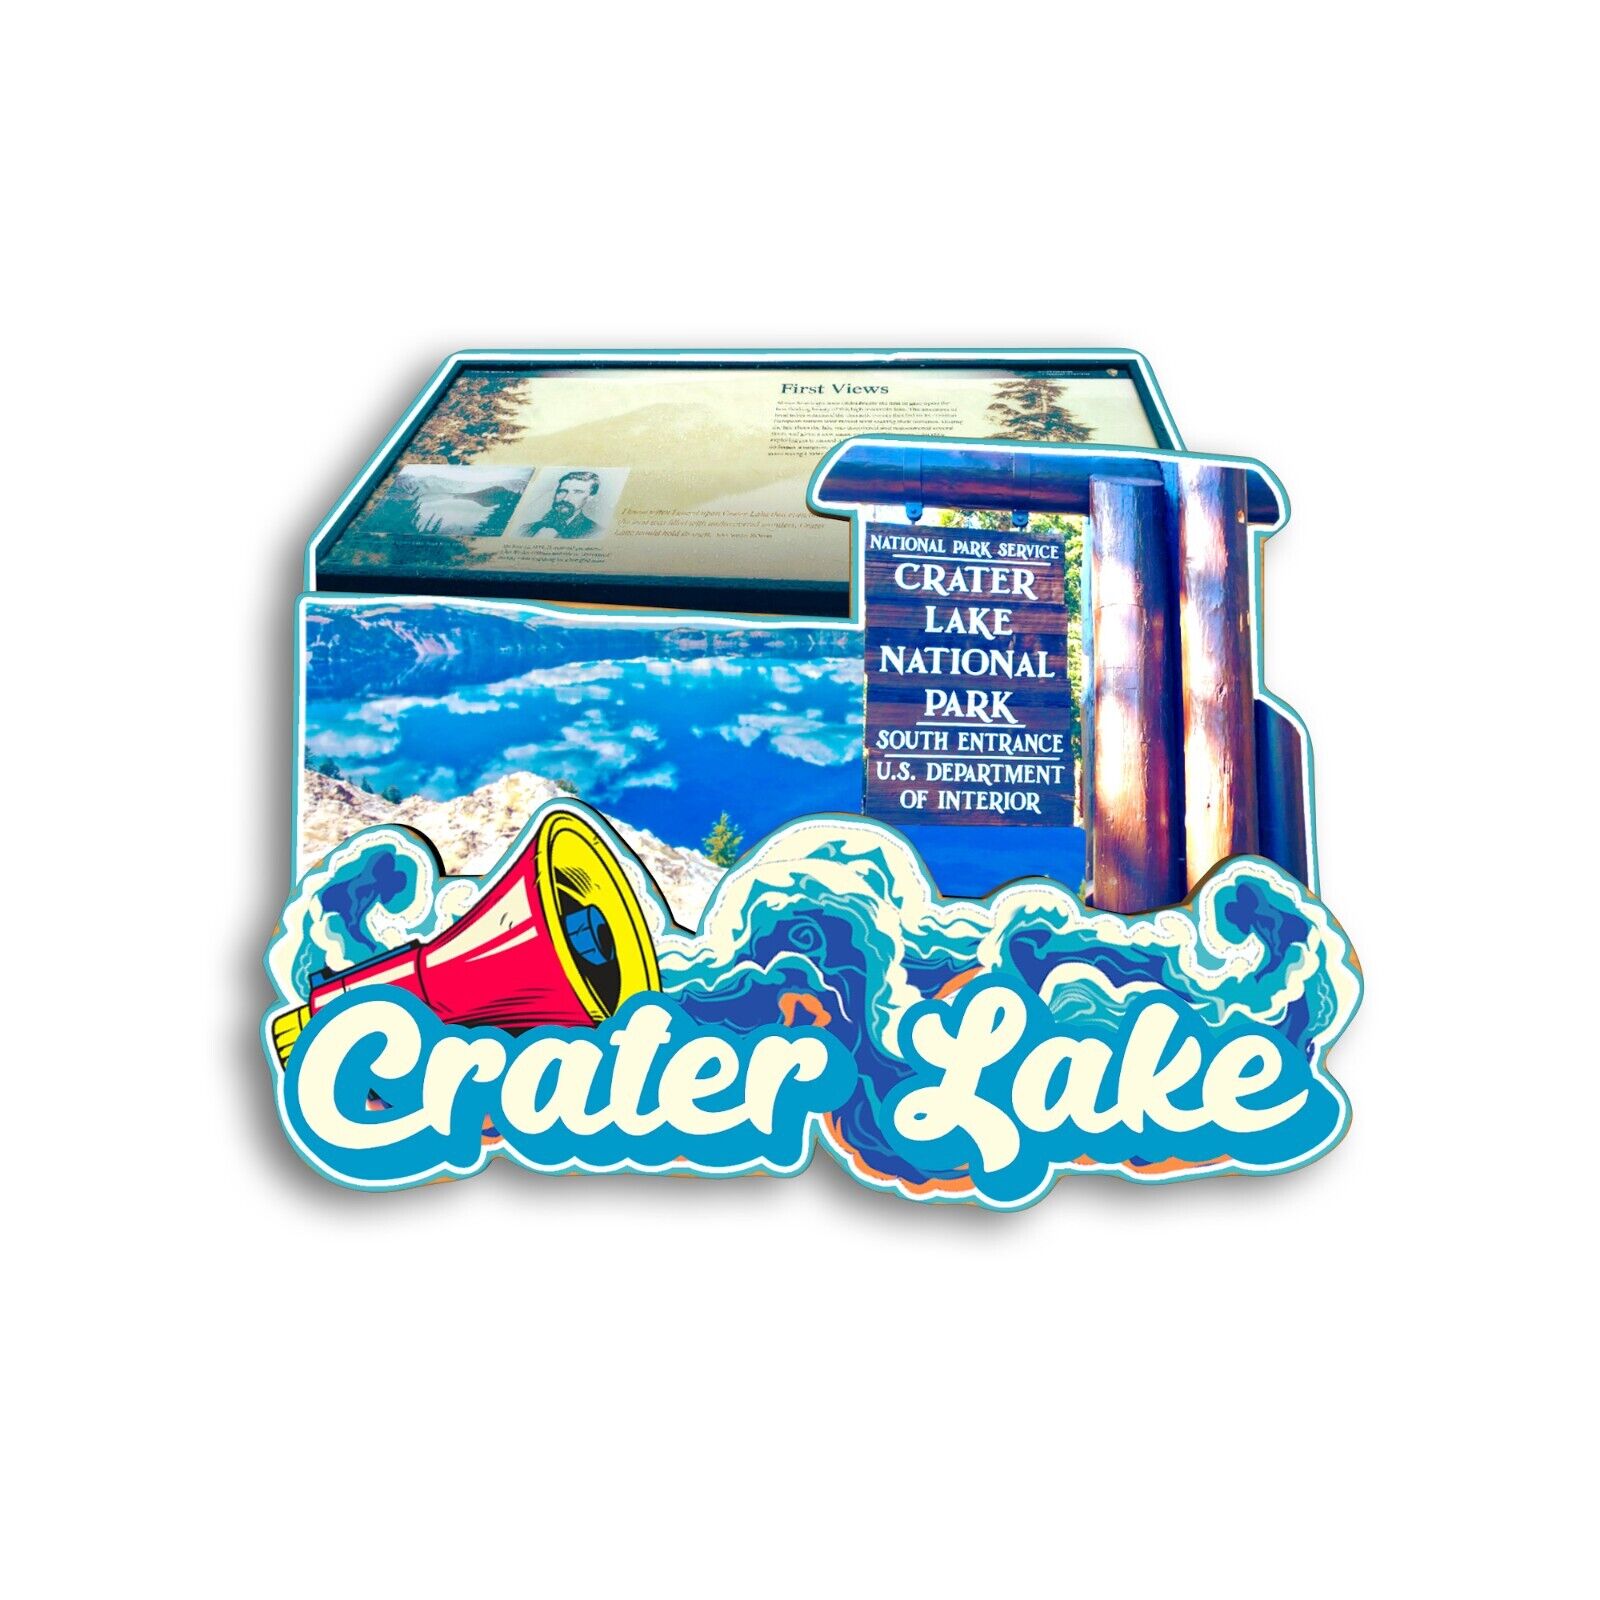 Crater Lake National Park USA Refrigerator magnet 3D travel souvenirs wood craft